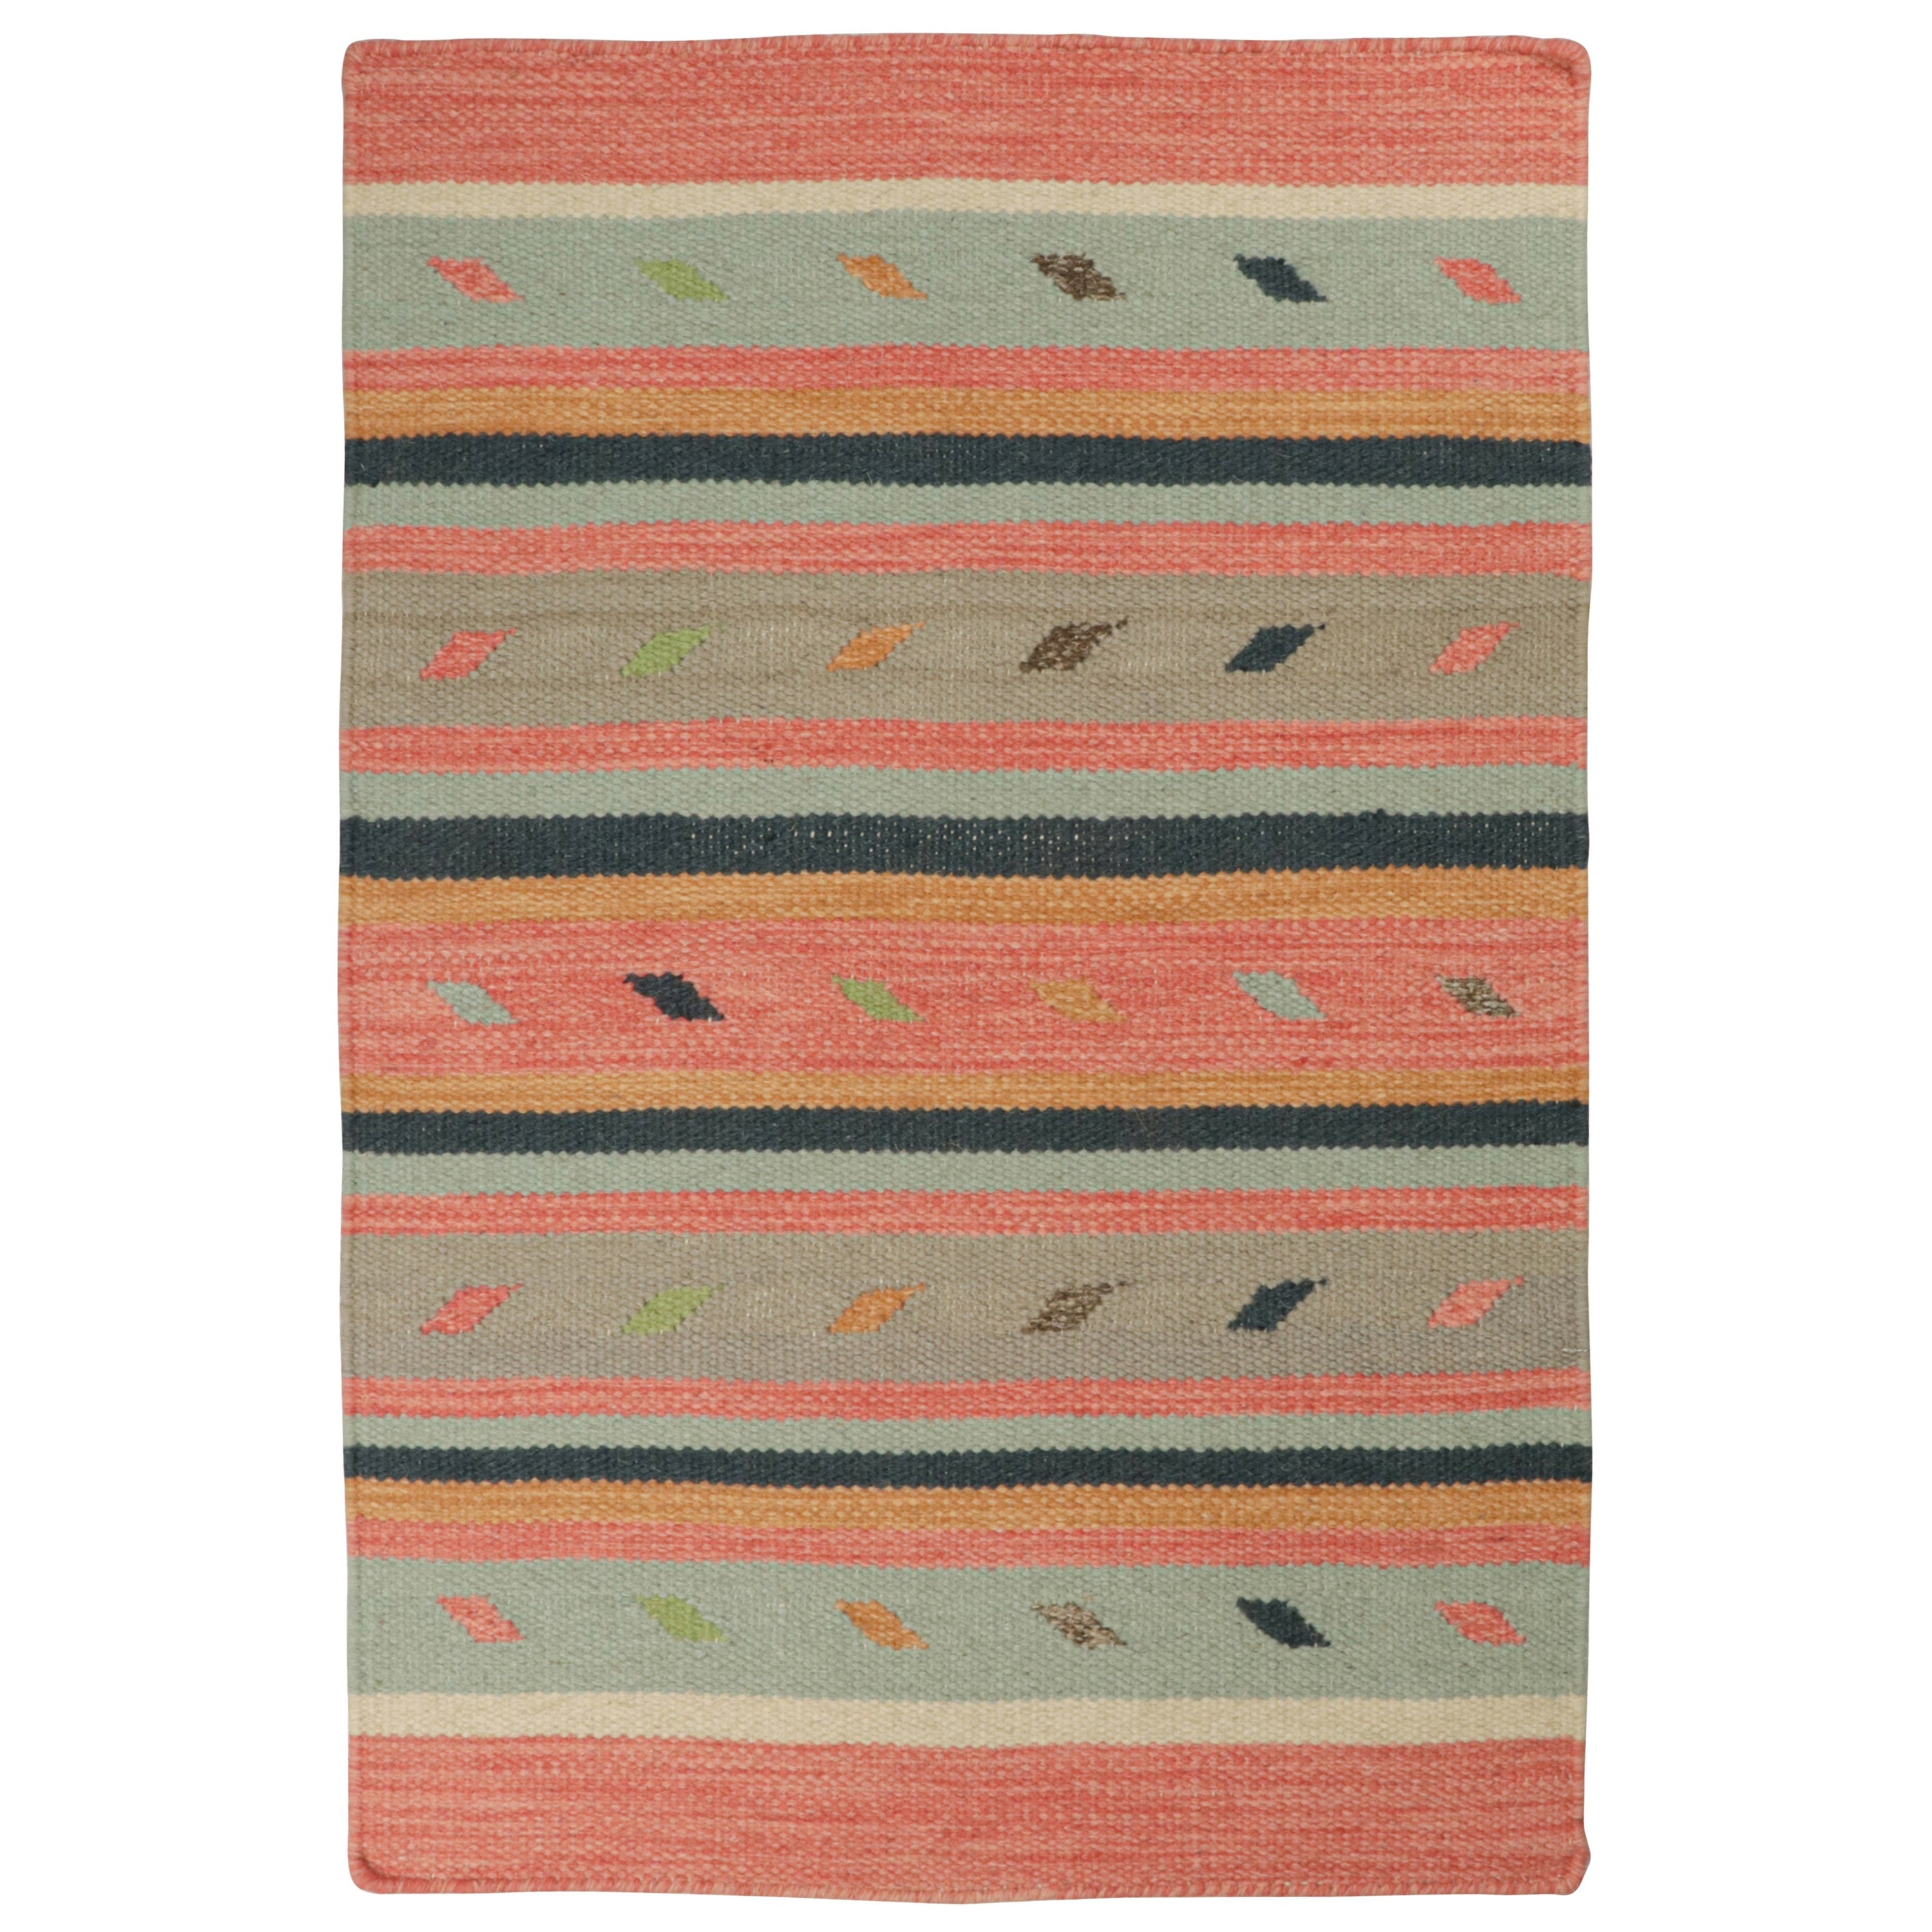 Rug & Kilim’s Tribal style Kilim rug in Multicolor Patterns For Sale